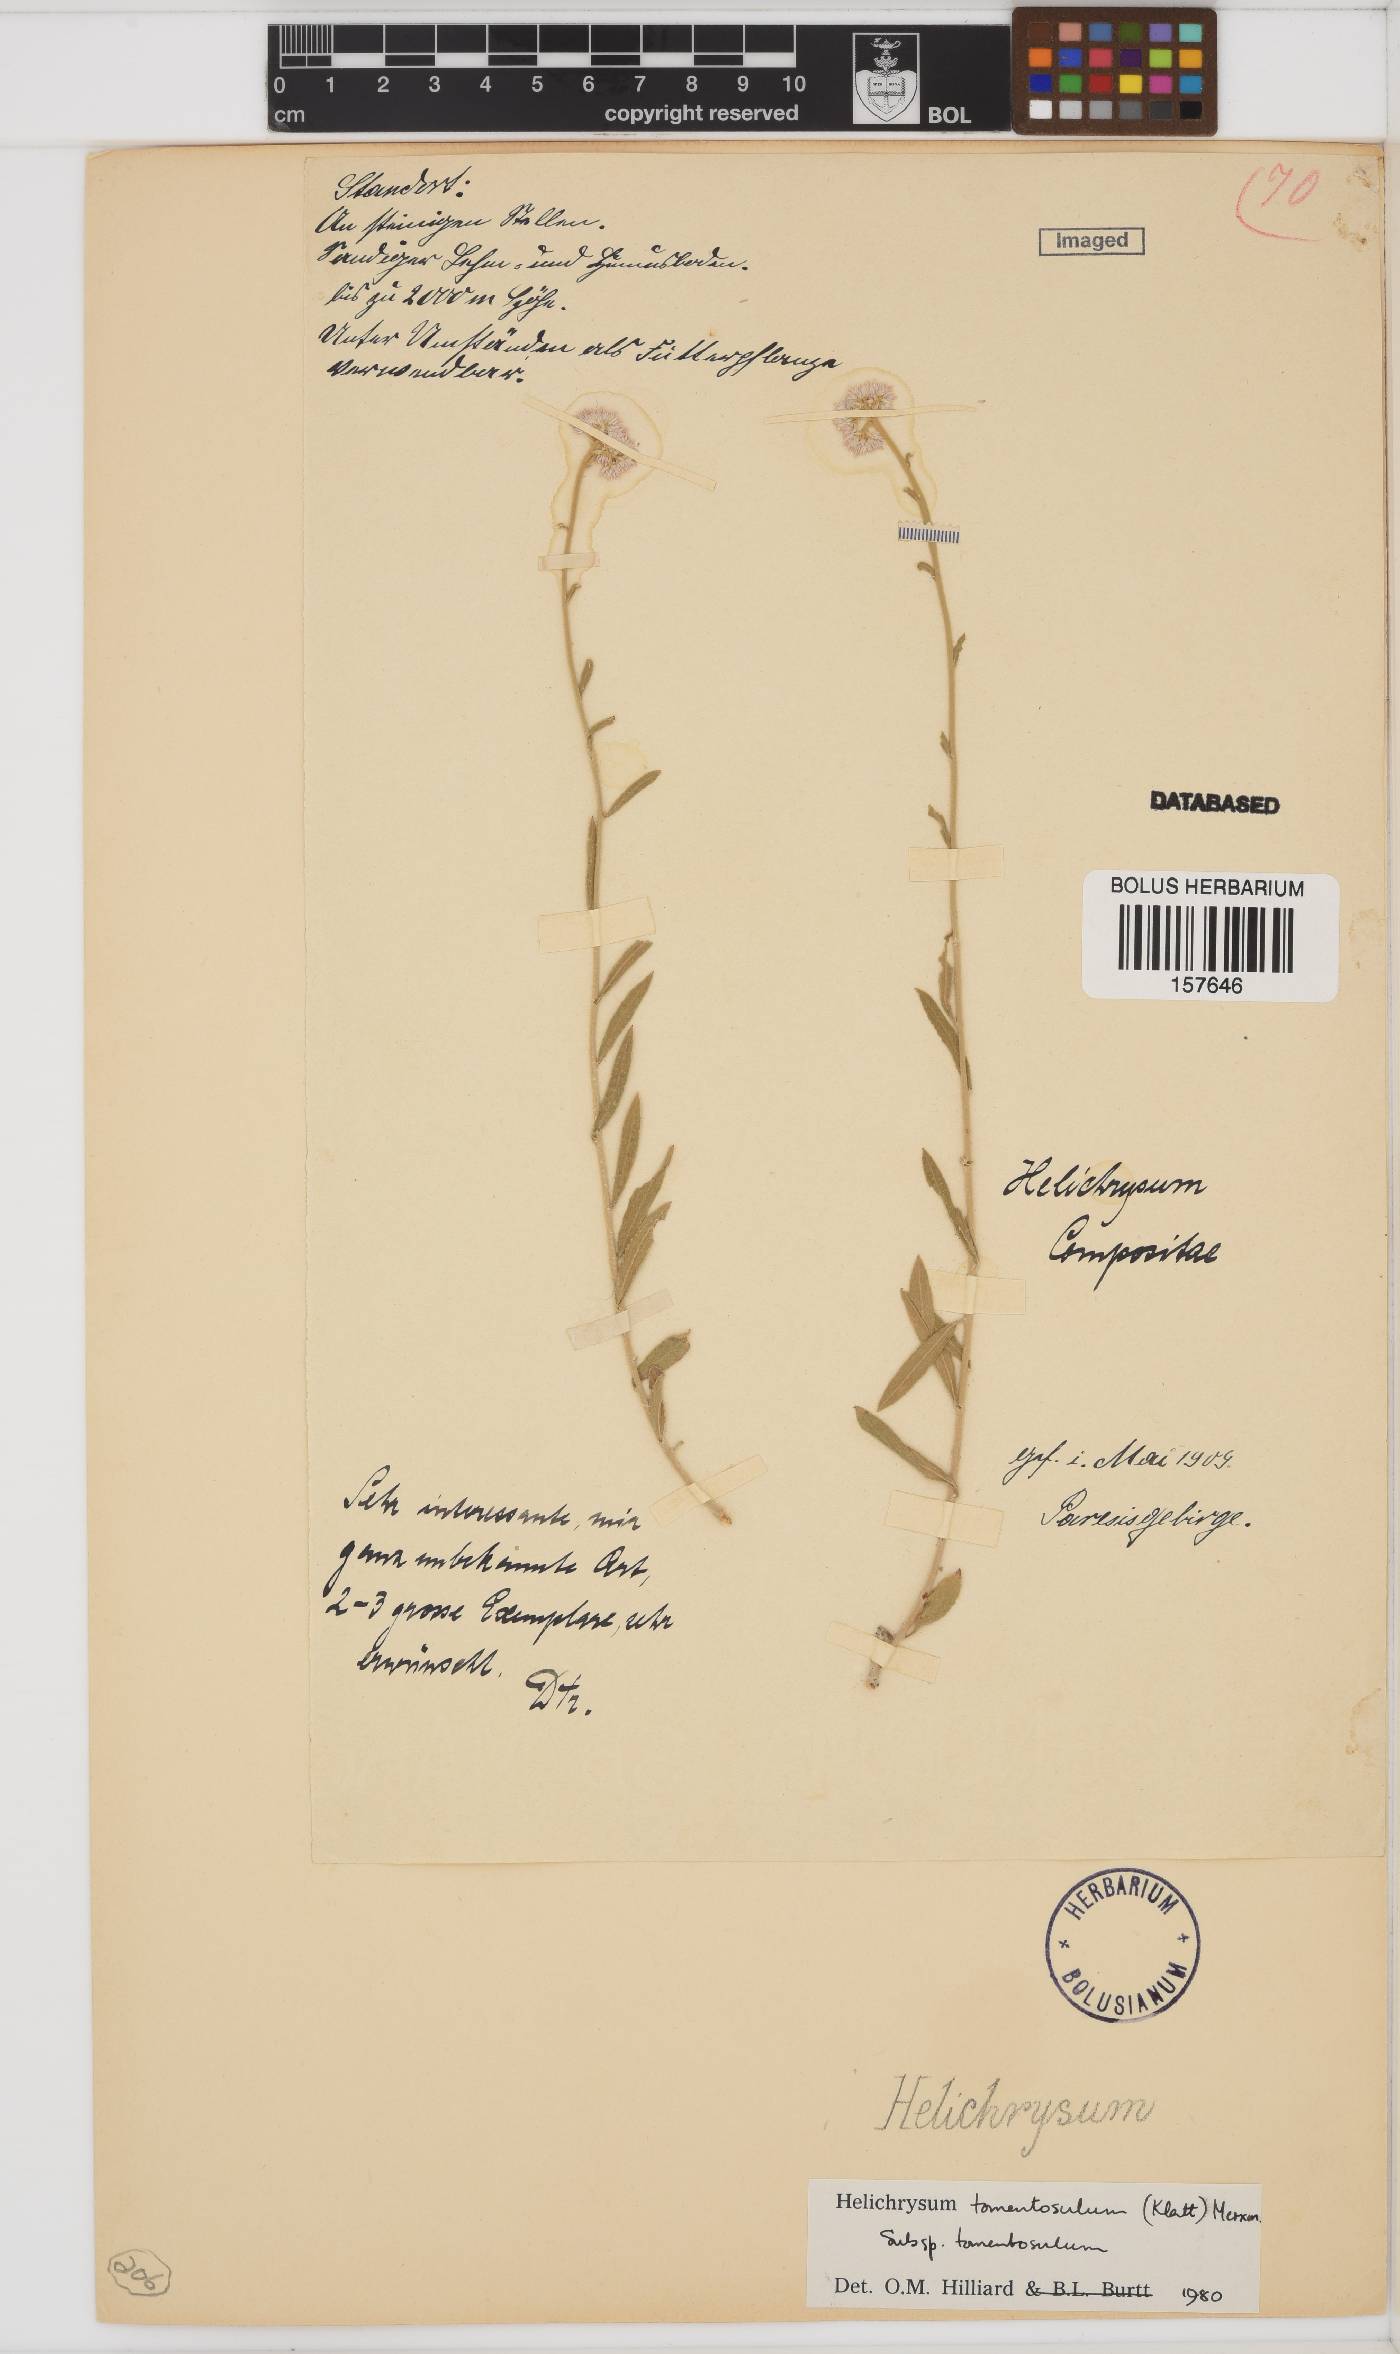 Heliophila arenaria image